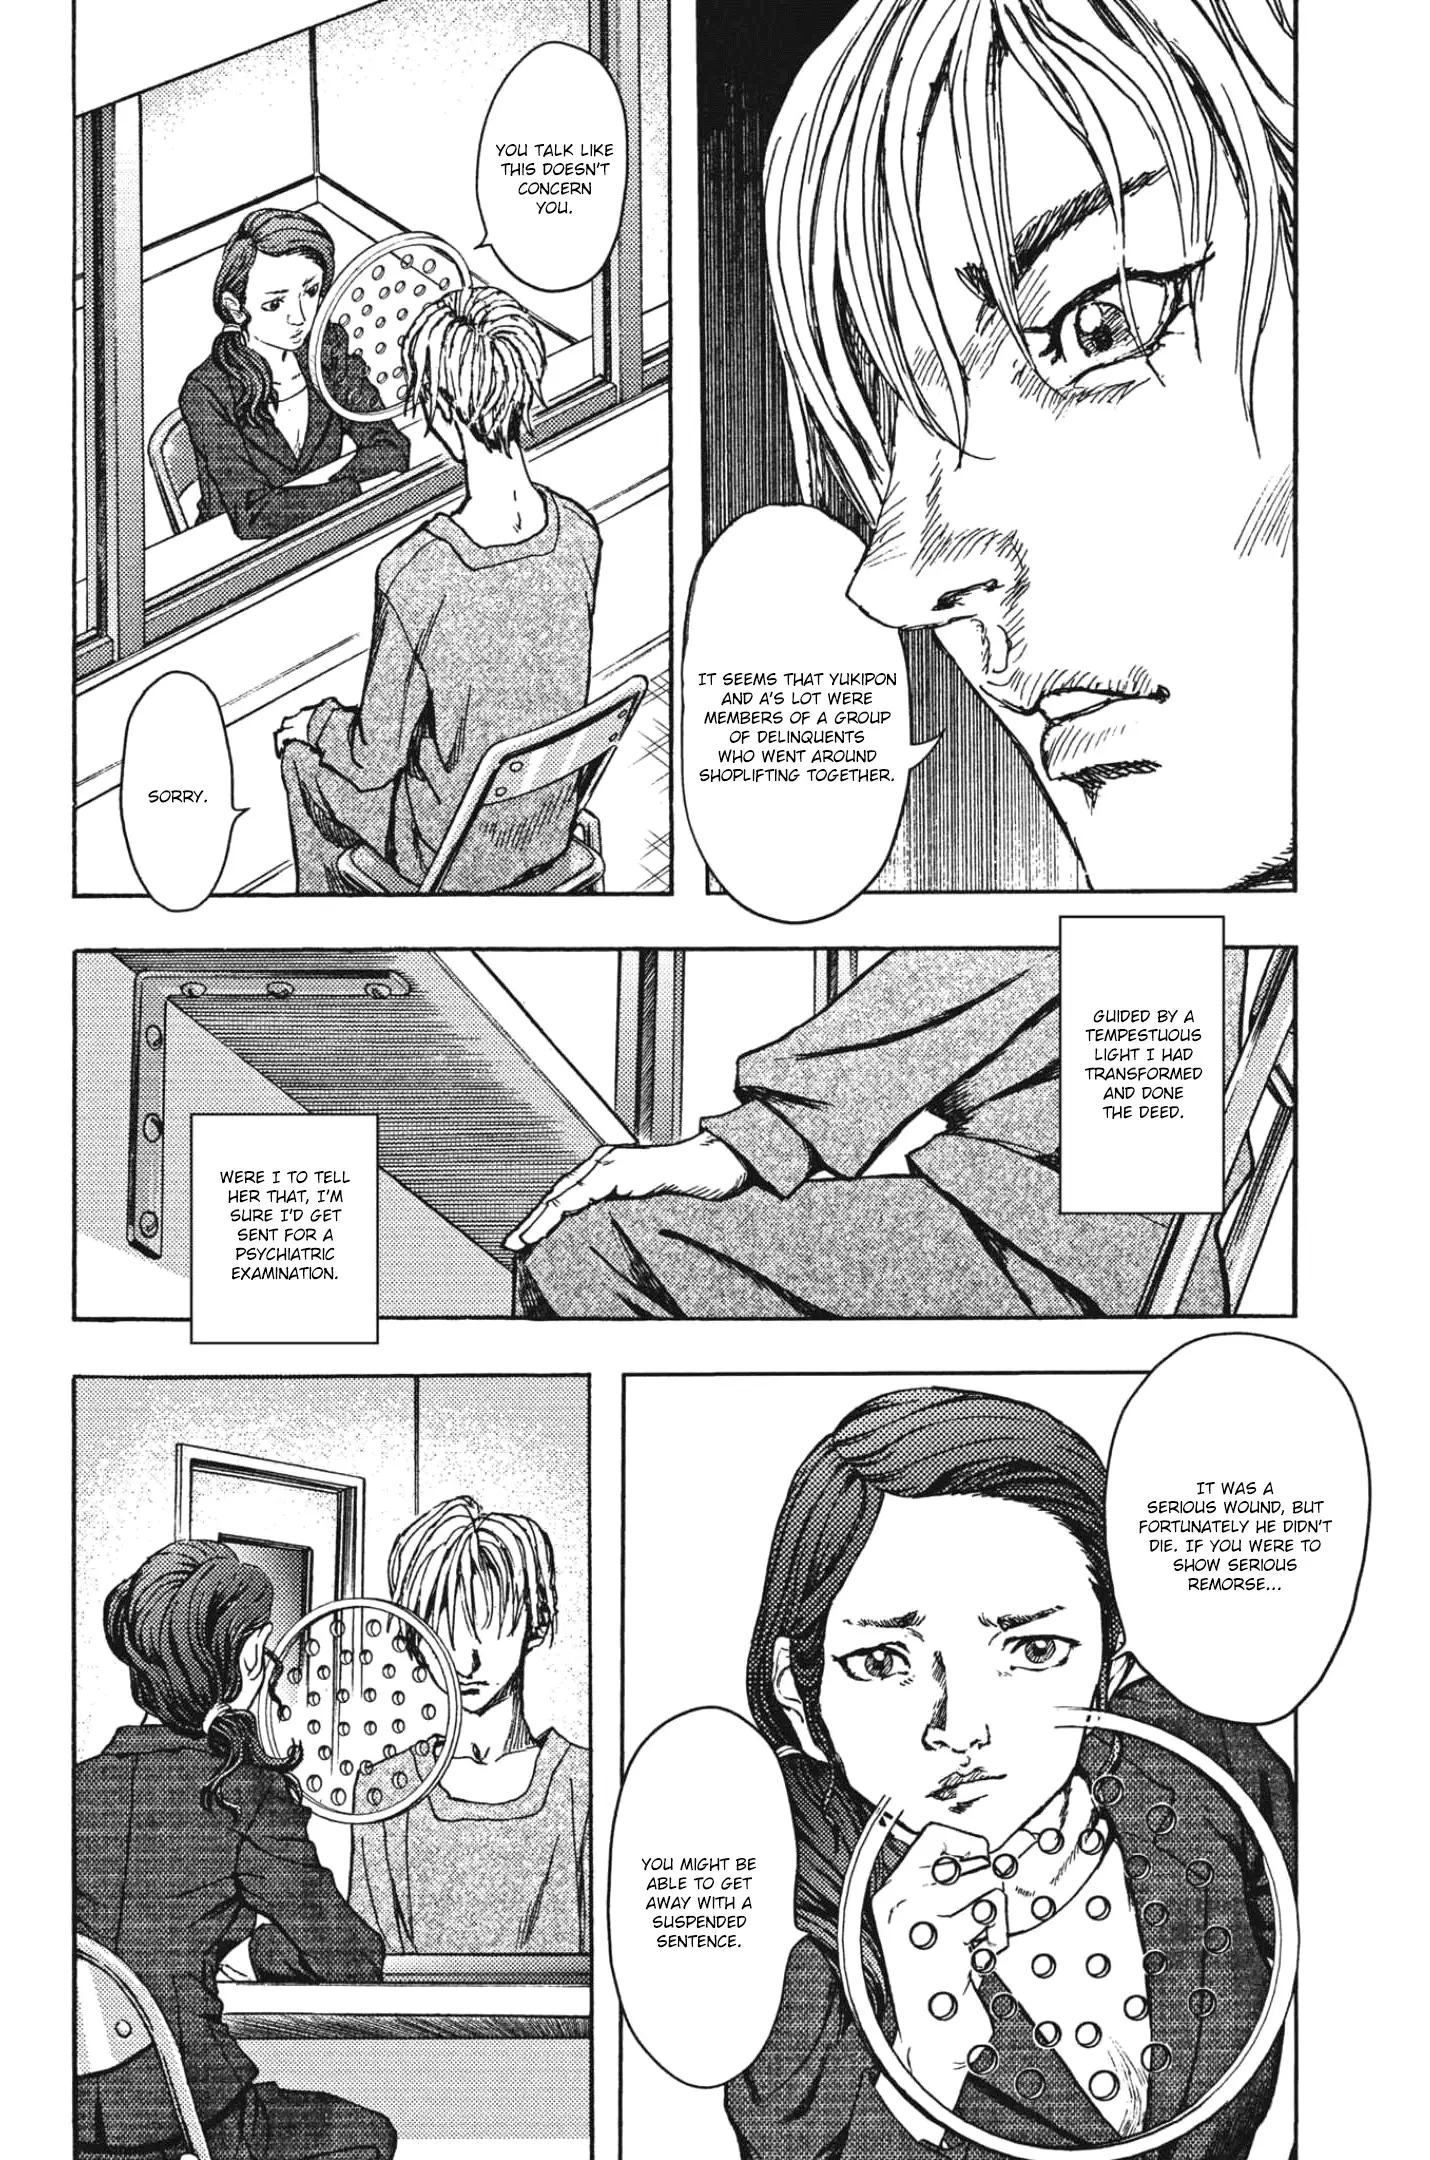 Gekikou Kamen - 15 page 14-8c096f03